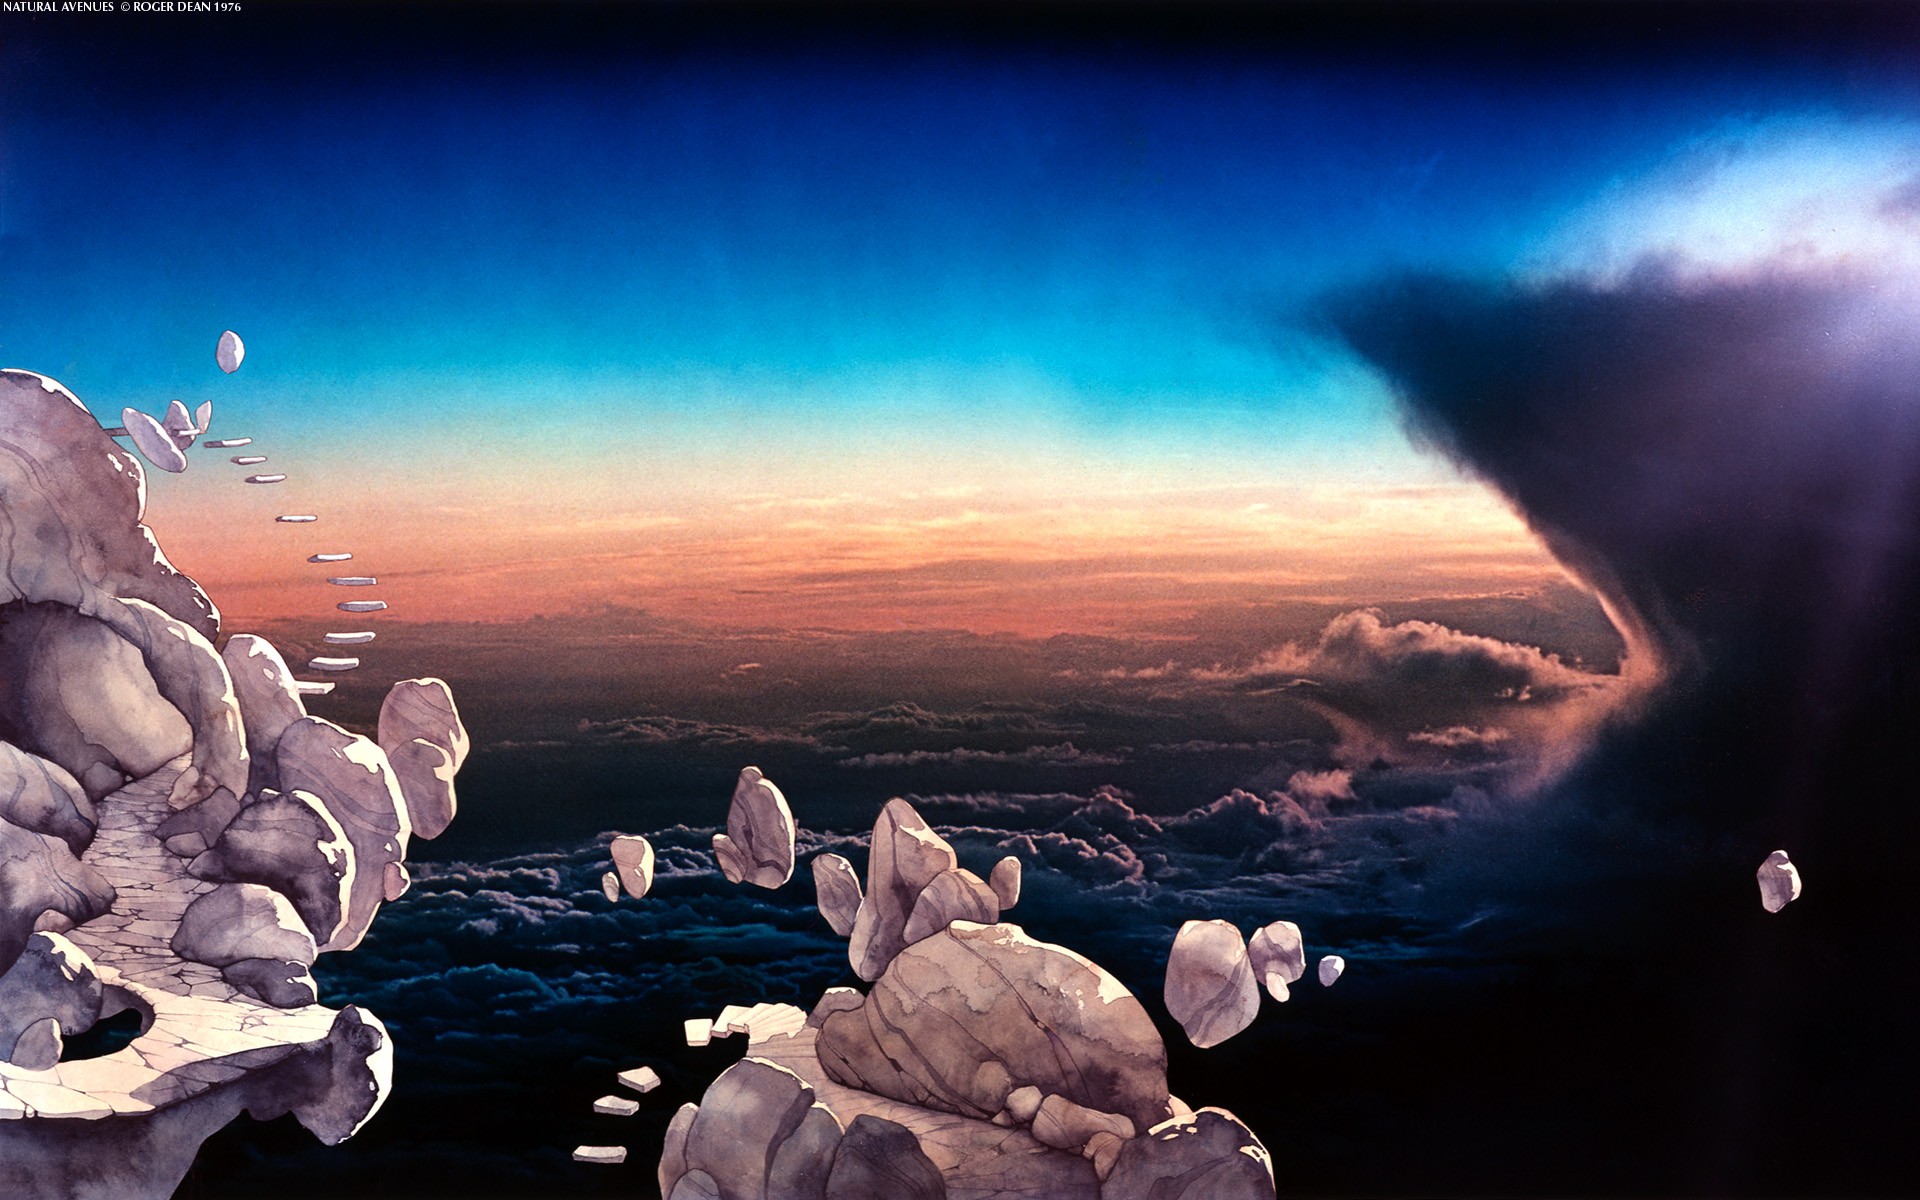 Roger Dean Rock Fantasy Art Clouds Digital Art Sky Stairs 1920x1200